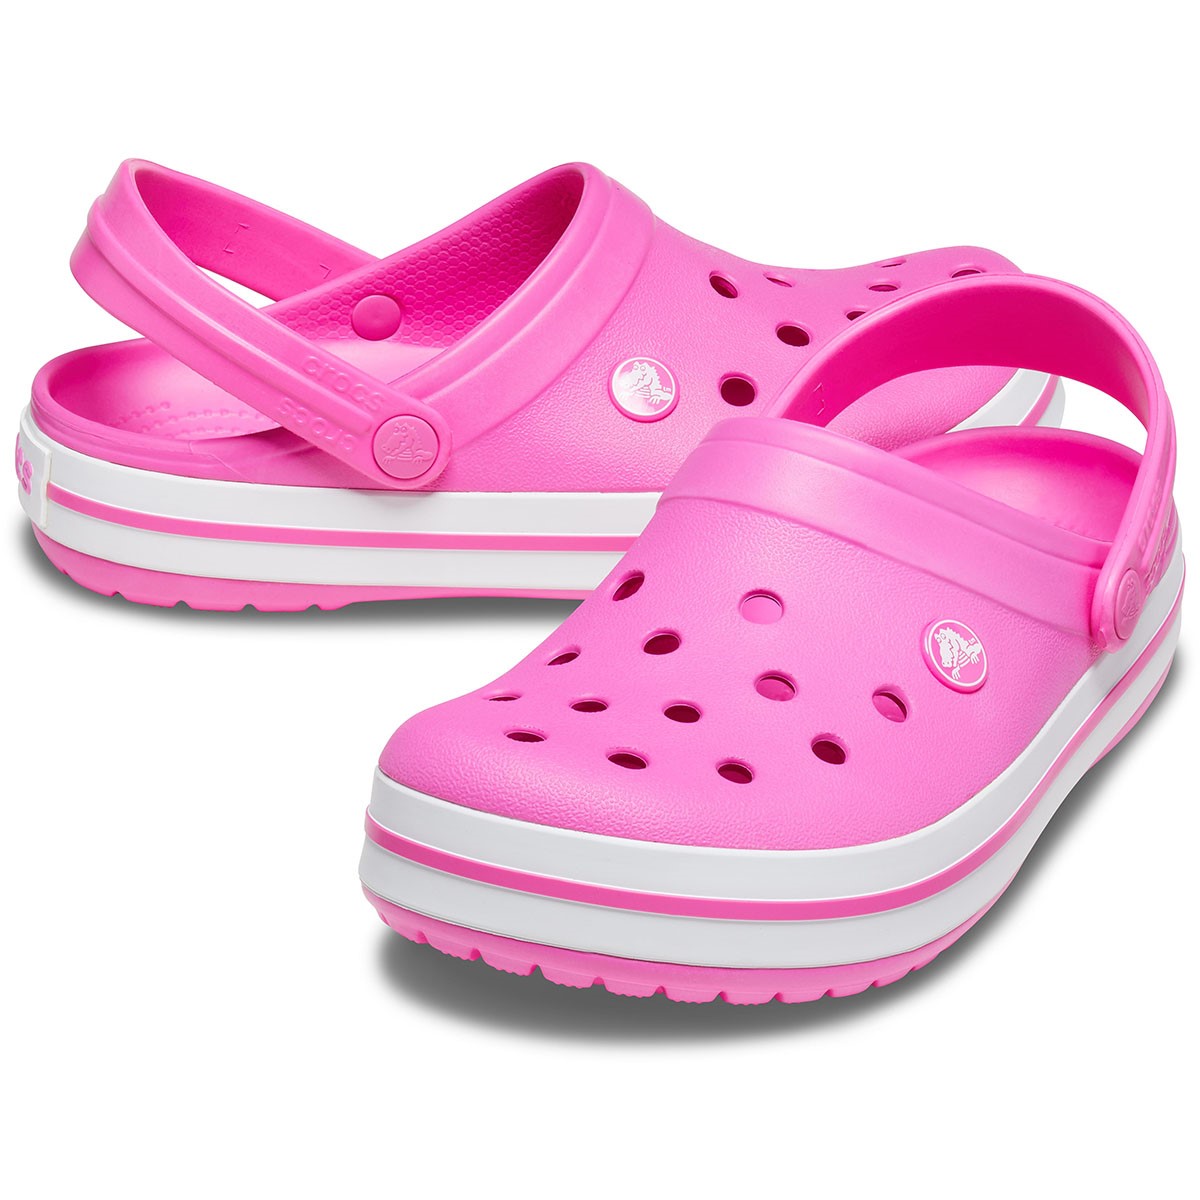 Crocs Unisex Sandalet 11016 Electric Pink/White